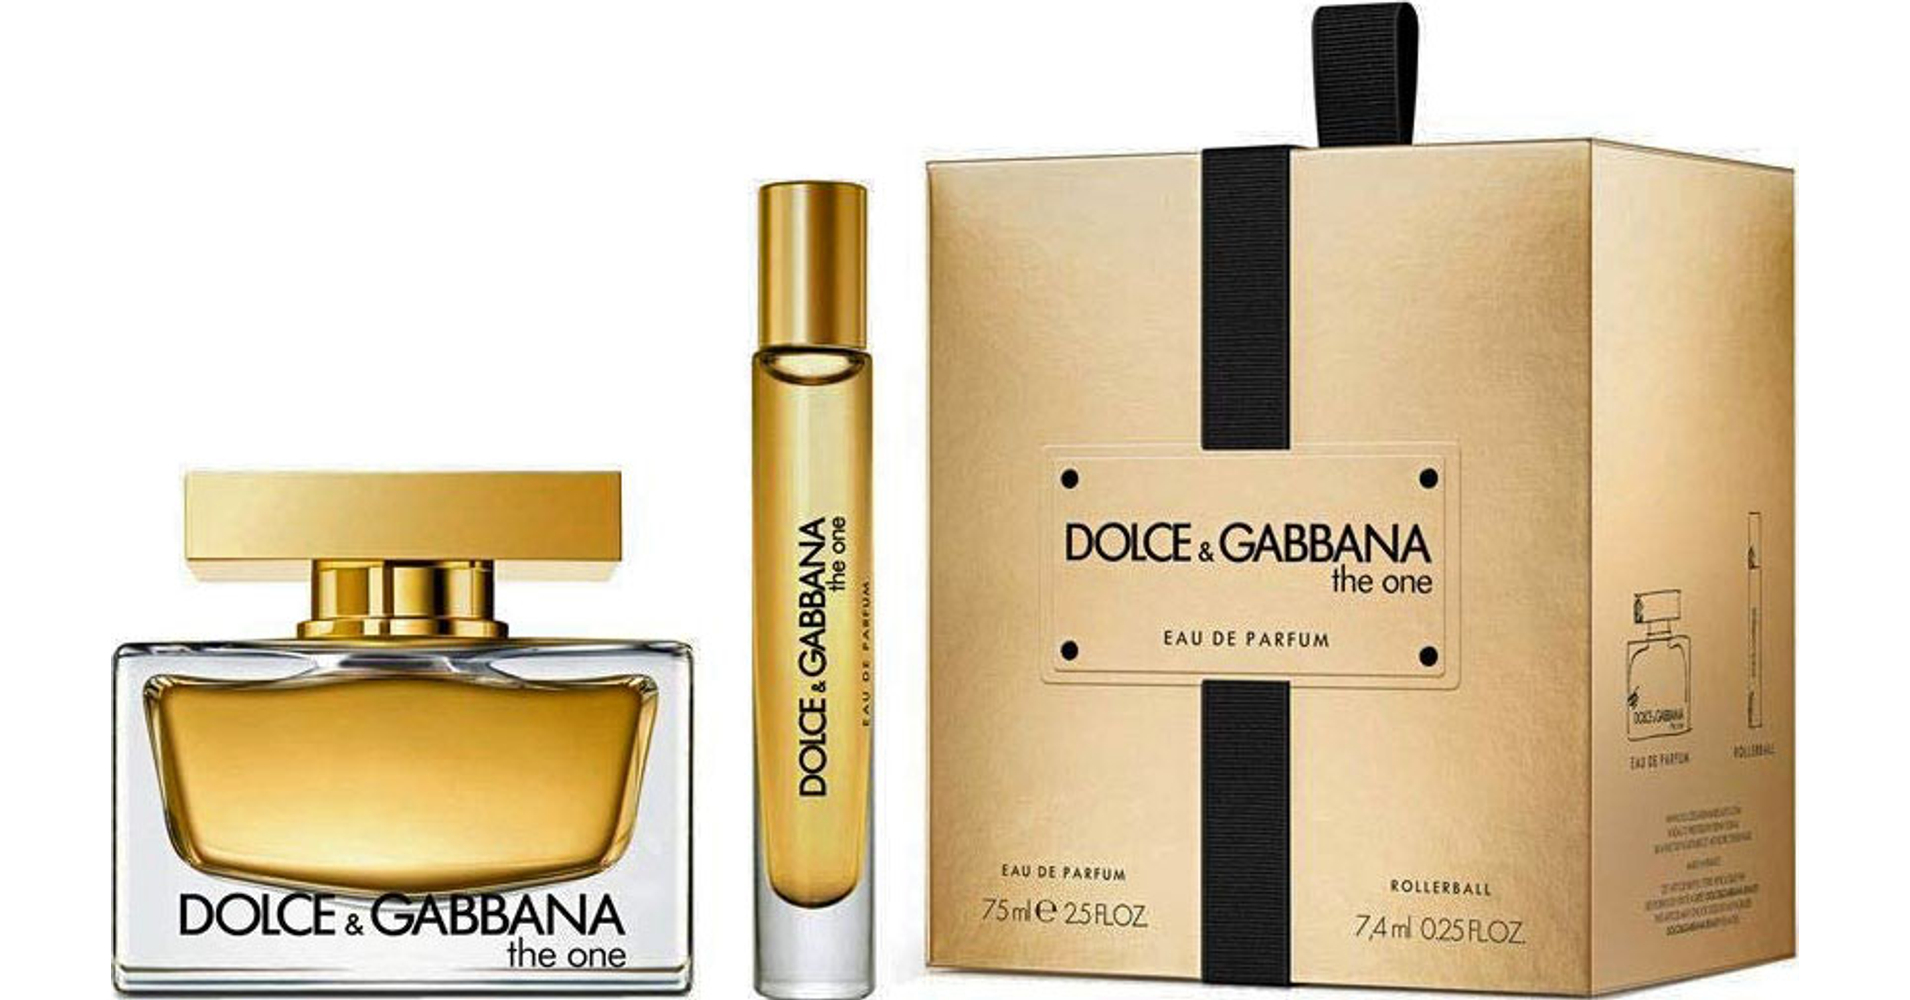 Дольче габбана the one купить. Евро Dolce & Gabbana the one,EDP., 75 ml. Dolce&Gabbana набор the only one. Dolce Gabbana the one набор. Набор Dolce Gabbana the one for men.